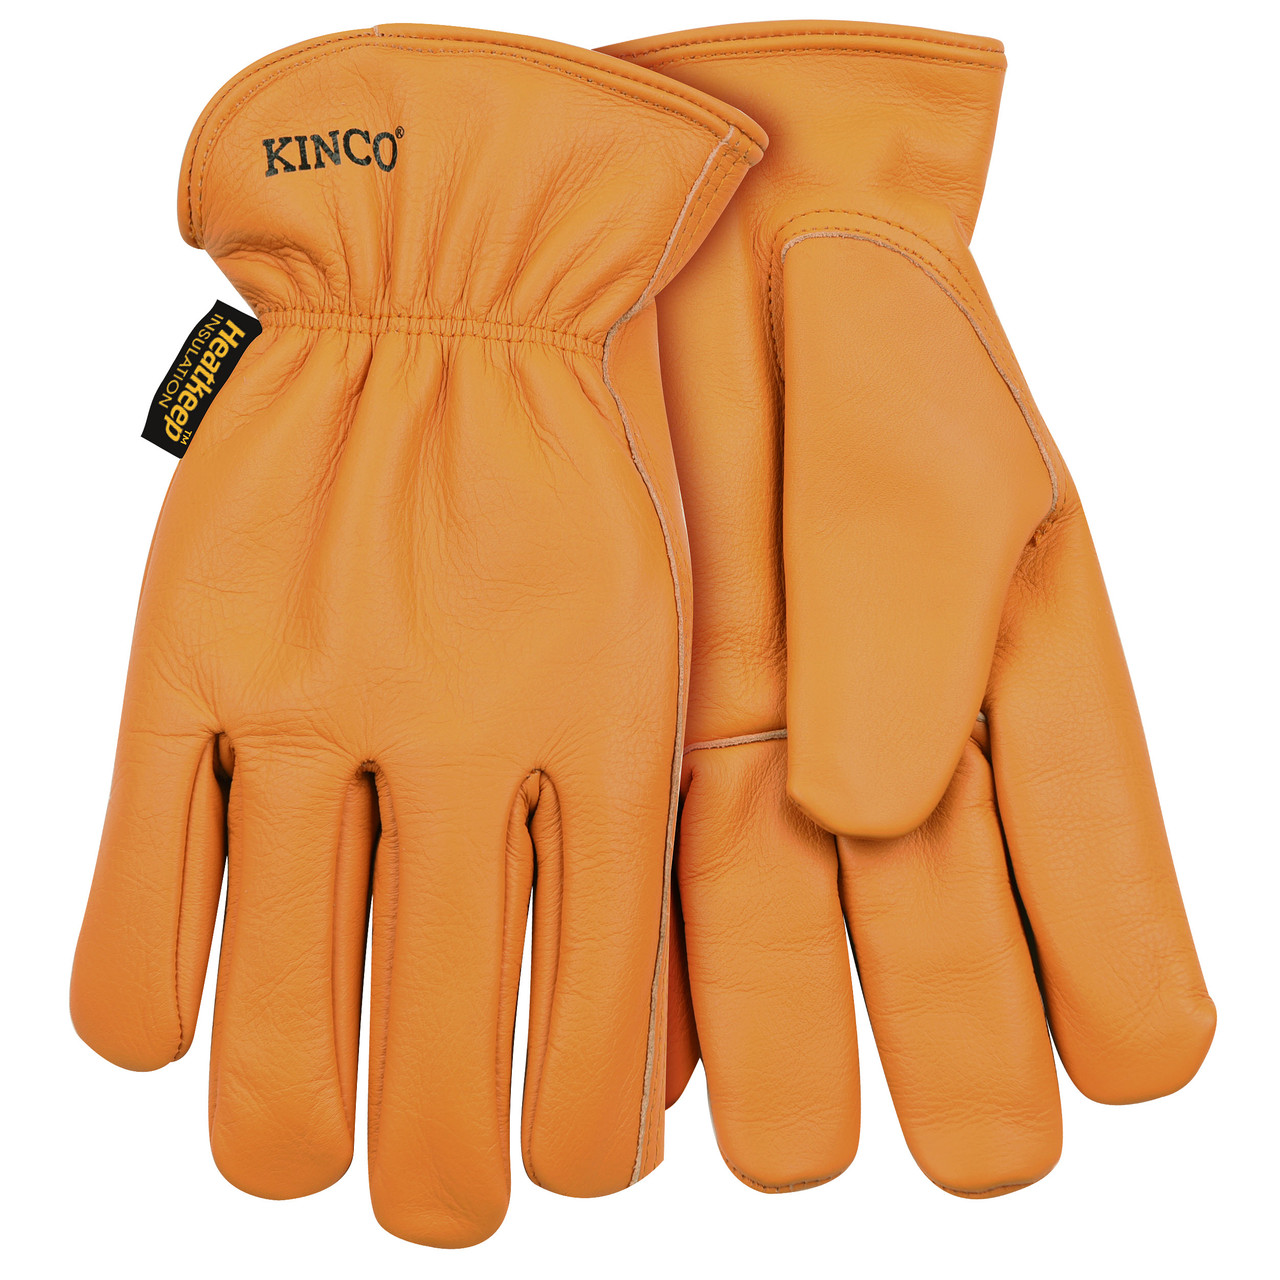 Kingsize Men's Big & Tall Extra Large Work Gloves : Target